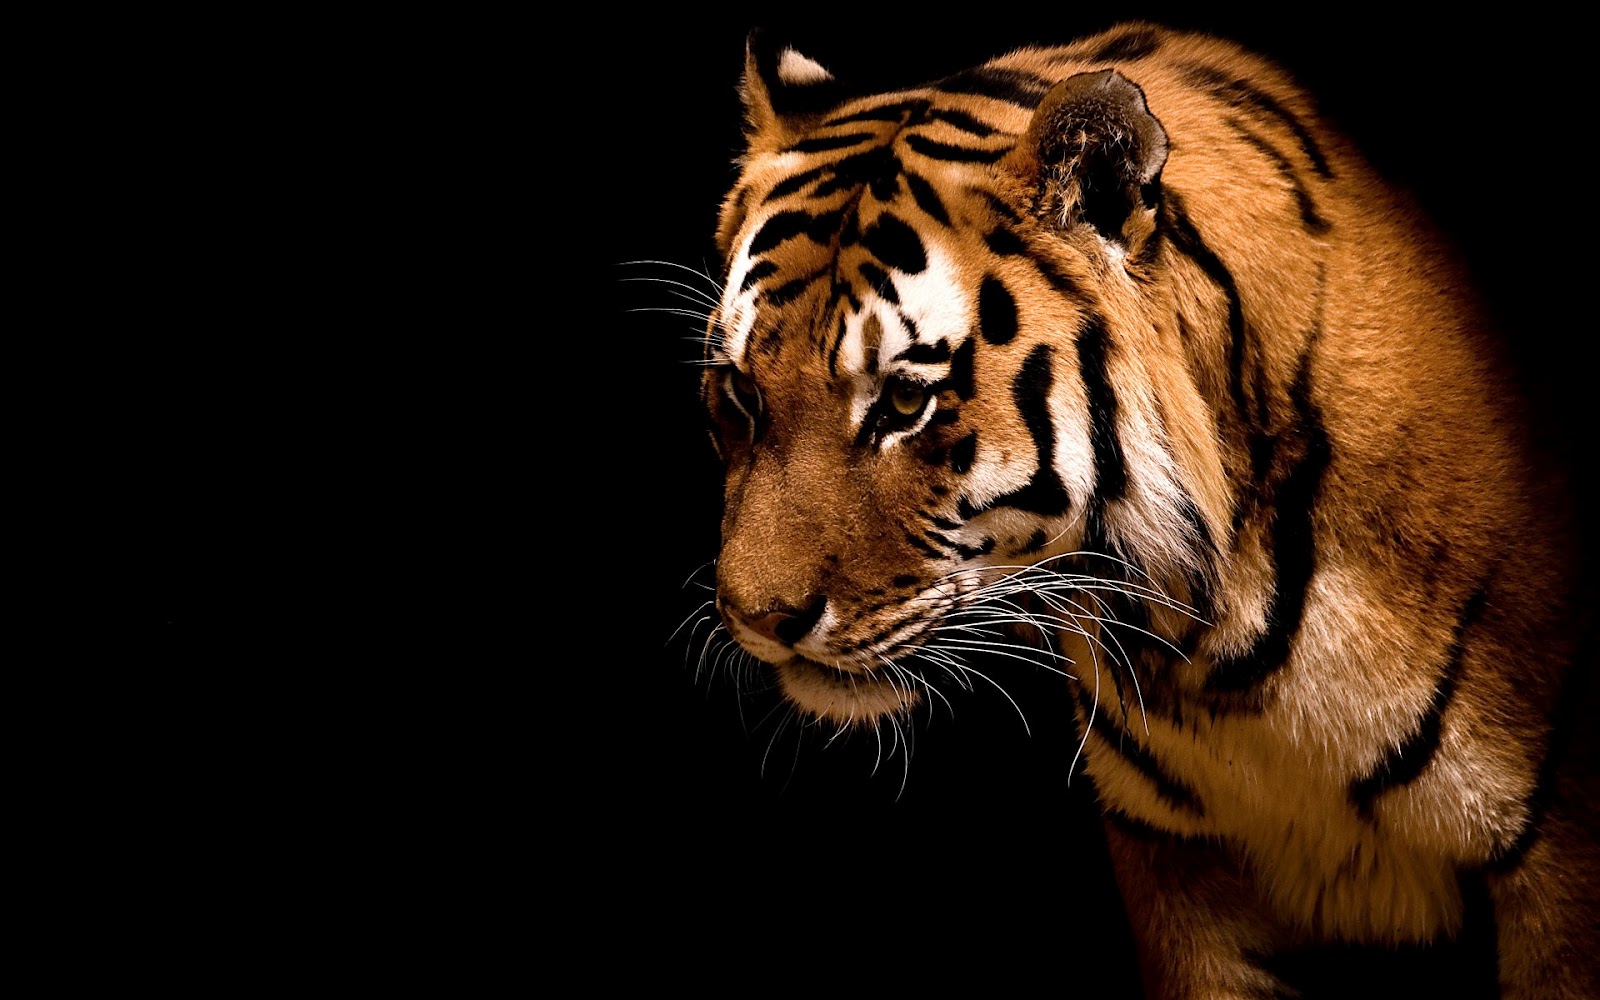    HD Desktop Wallpapers Free Online Amazing Wallpapers Of Tigers